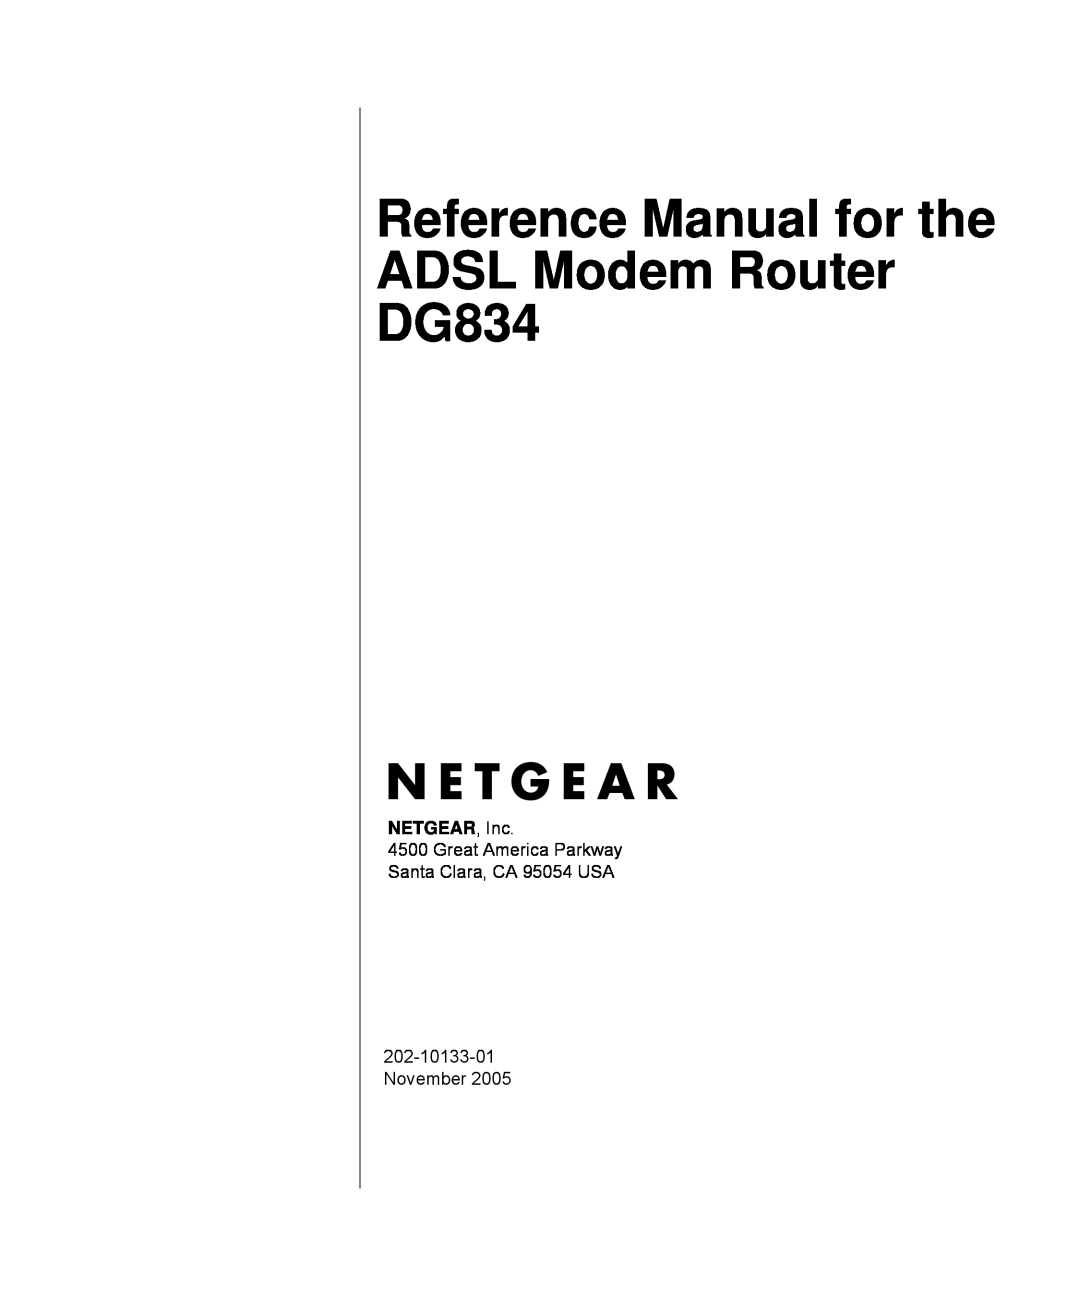 NETGEAR manual Reference Manual for the ADSL Modem Router DG834, NETGEAR, Inc 